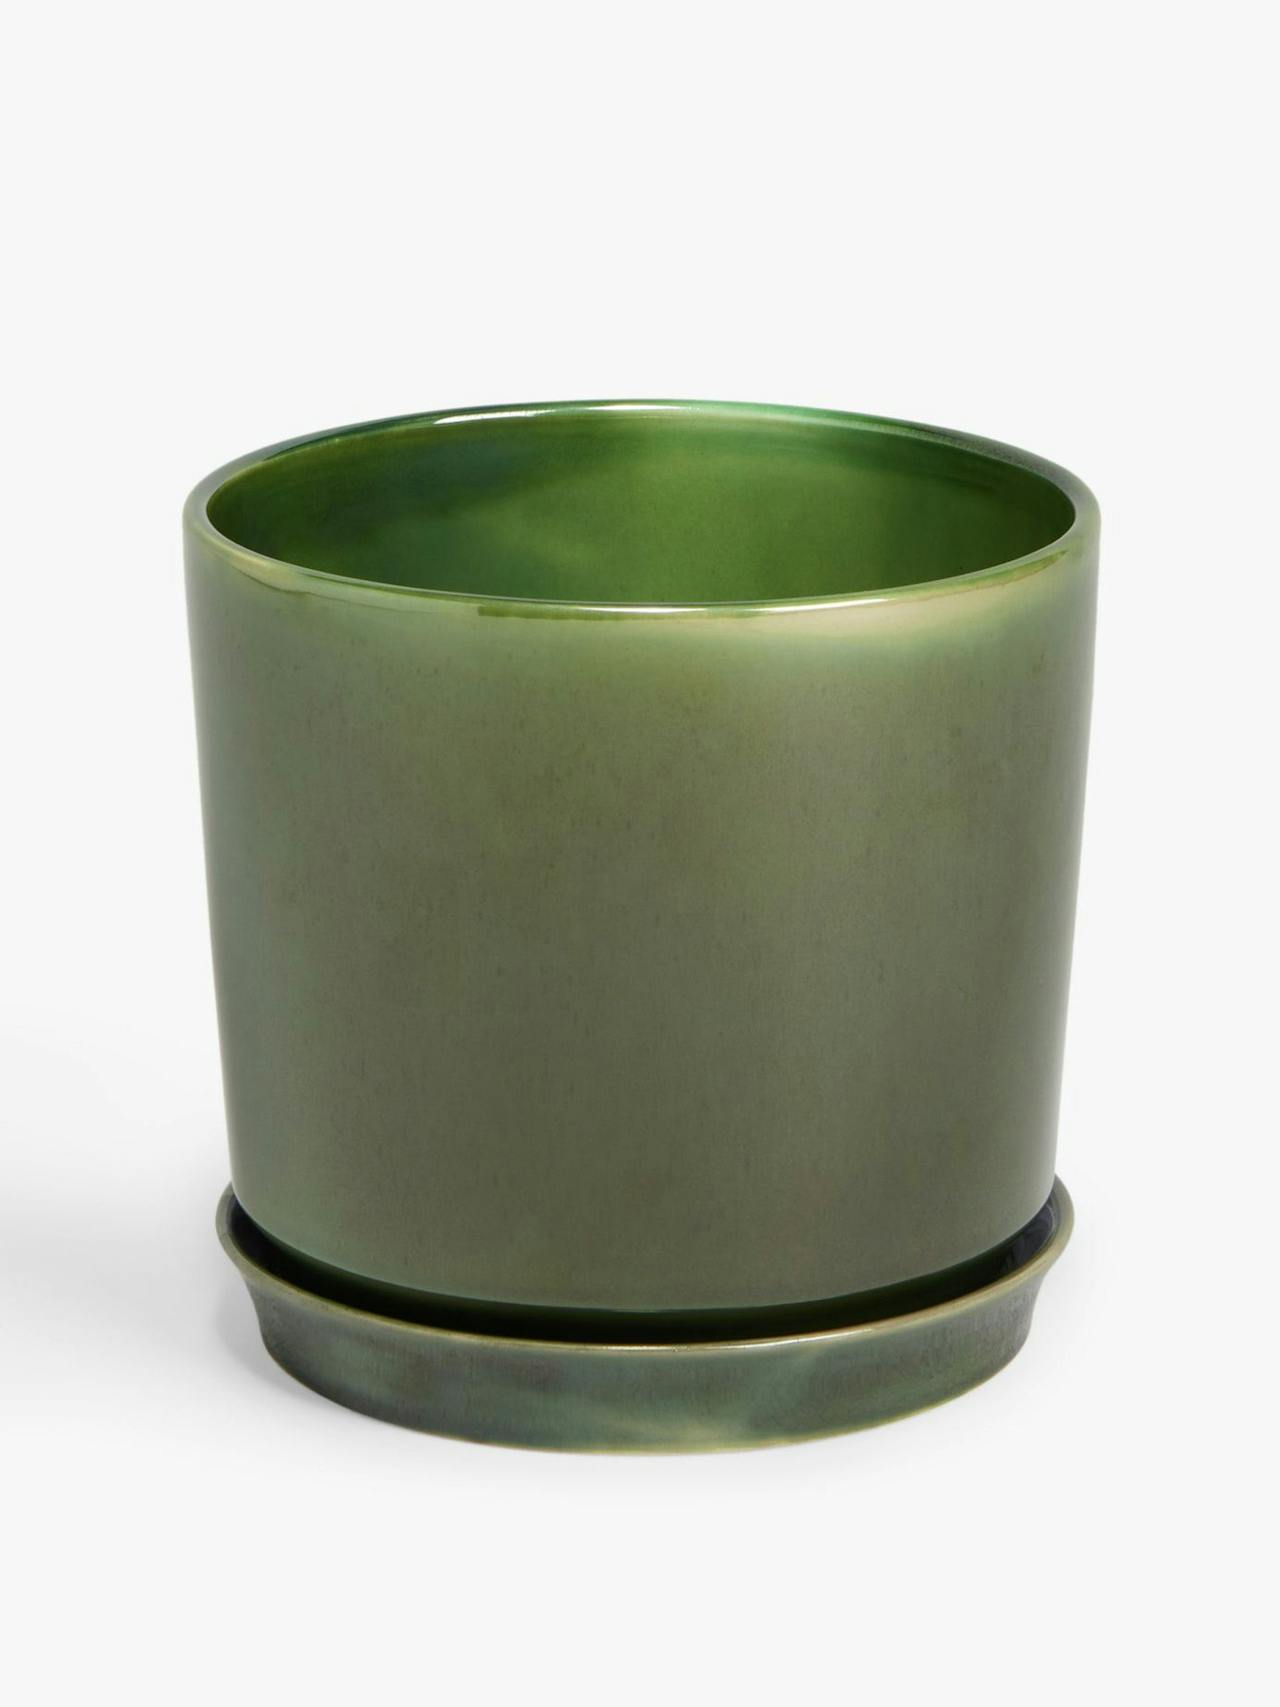 Contemporary glazed stoneware planter